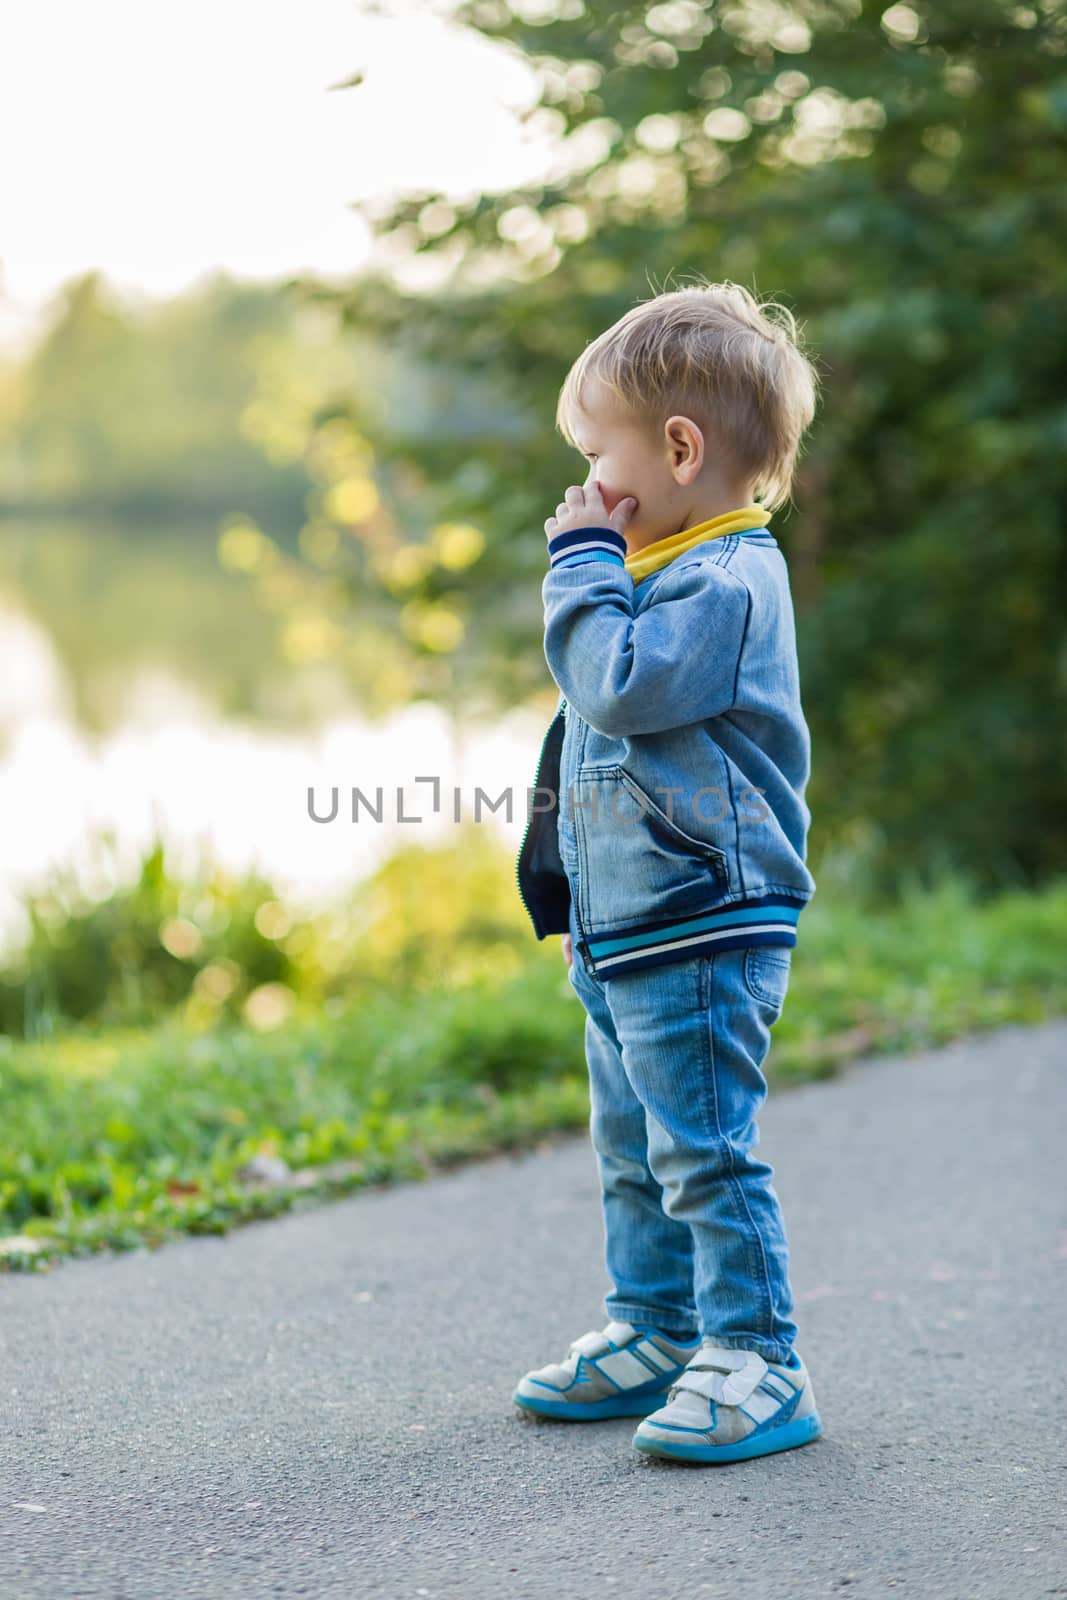 Little boy near a pond in a city park one autumn evening